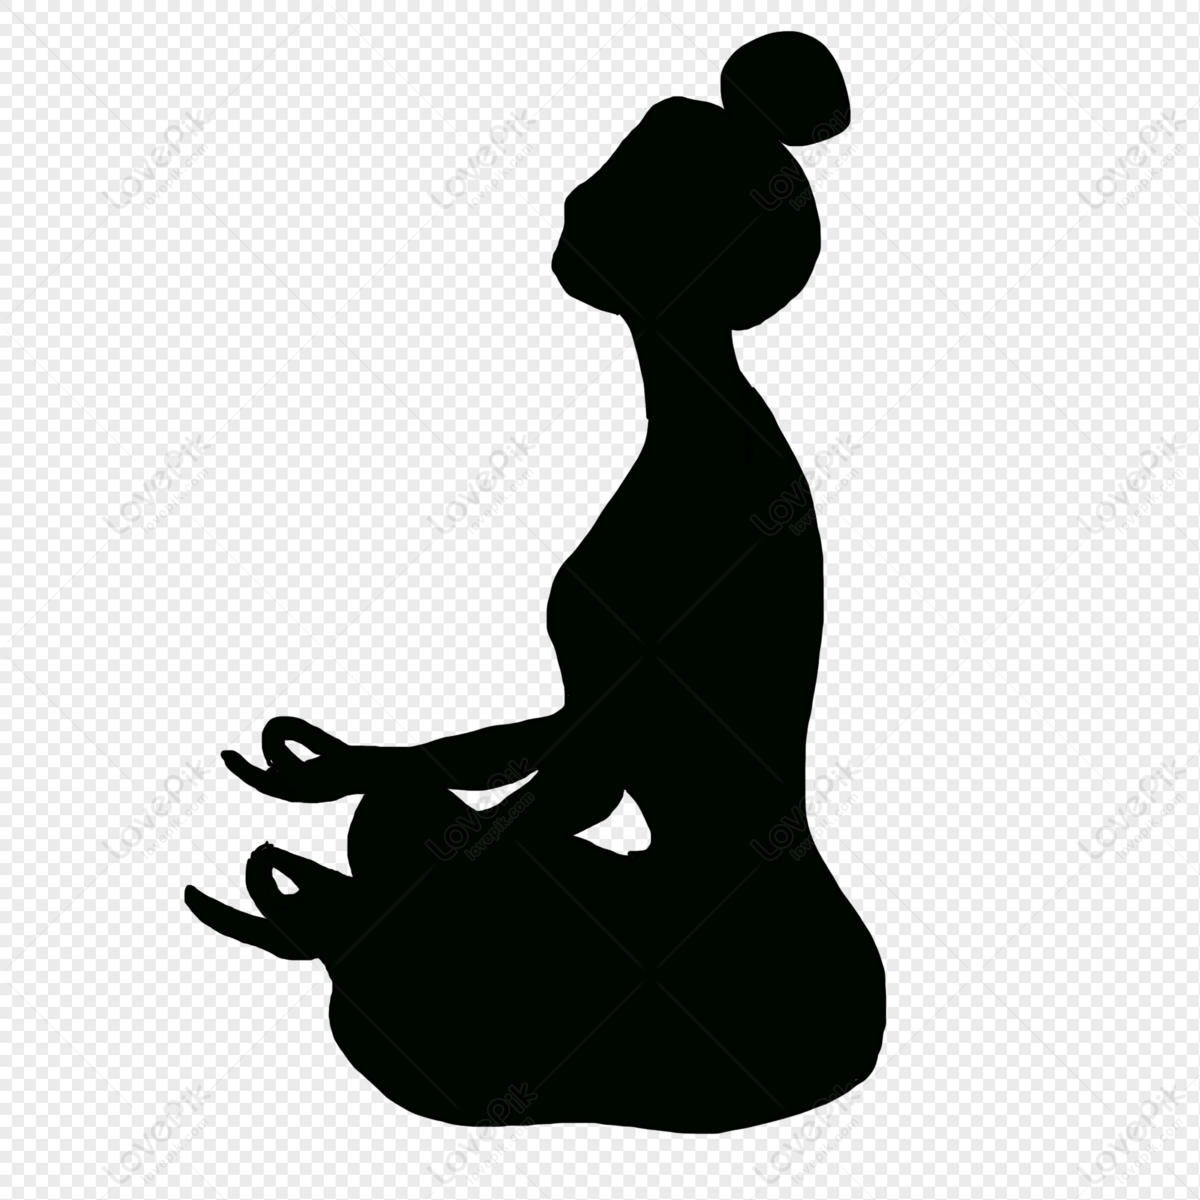 Yoga Kneeling Pose Vector PNG Images | EPS Free Download - Pikbest